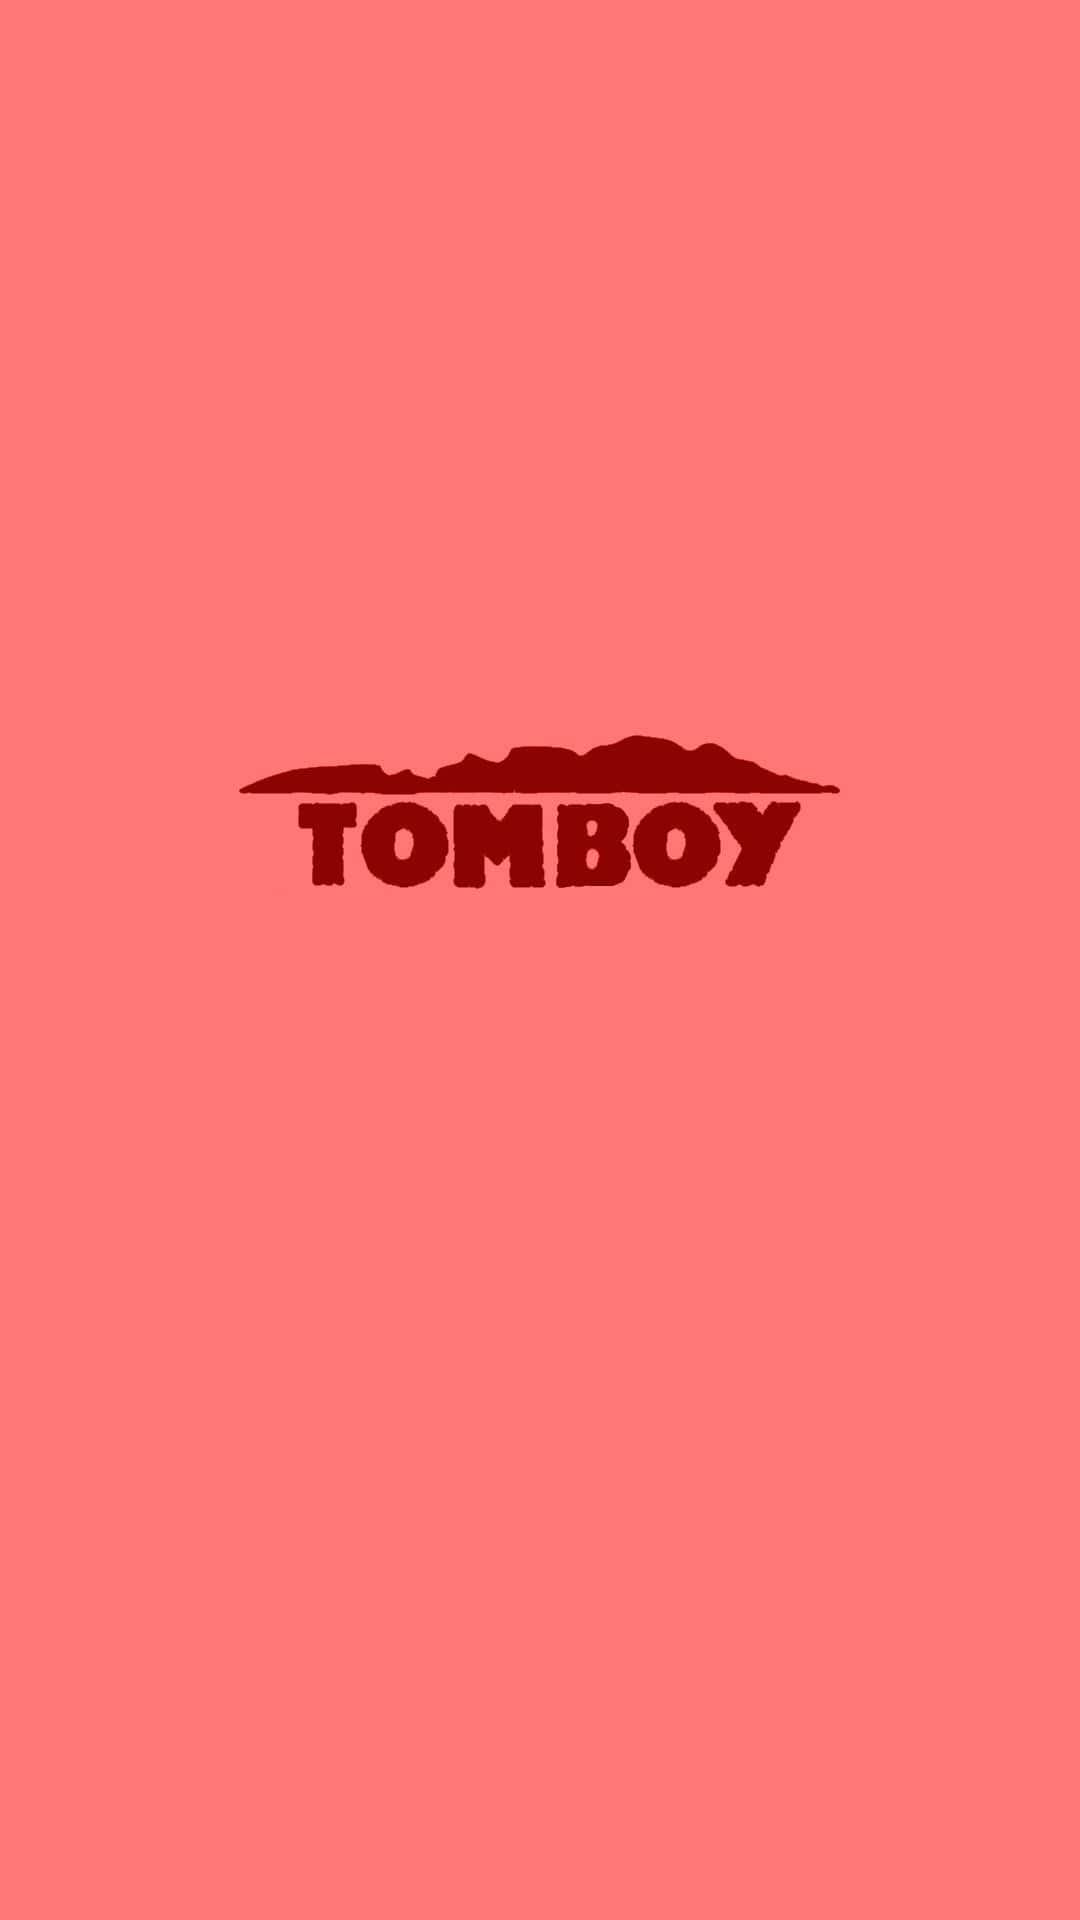 Wallpaper Tomboy Girl for Android - Download | Cafe Bazaar